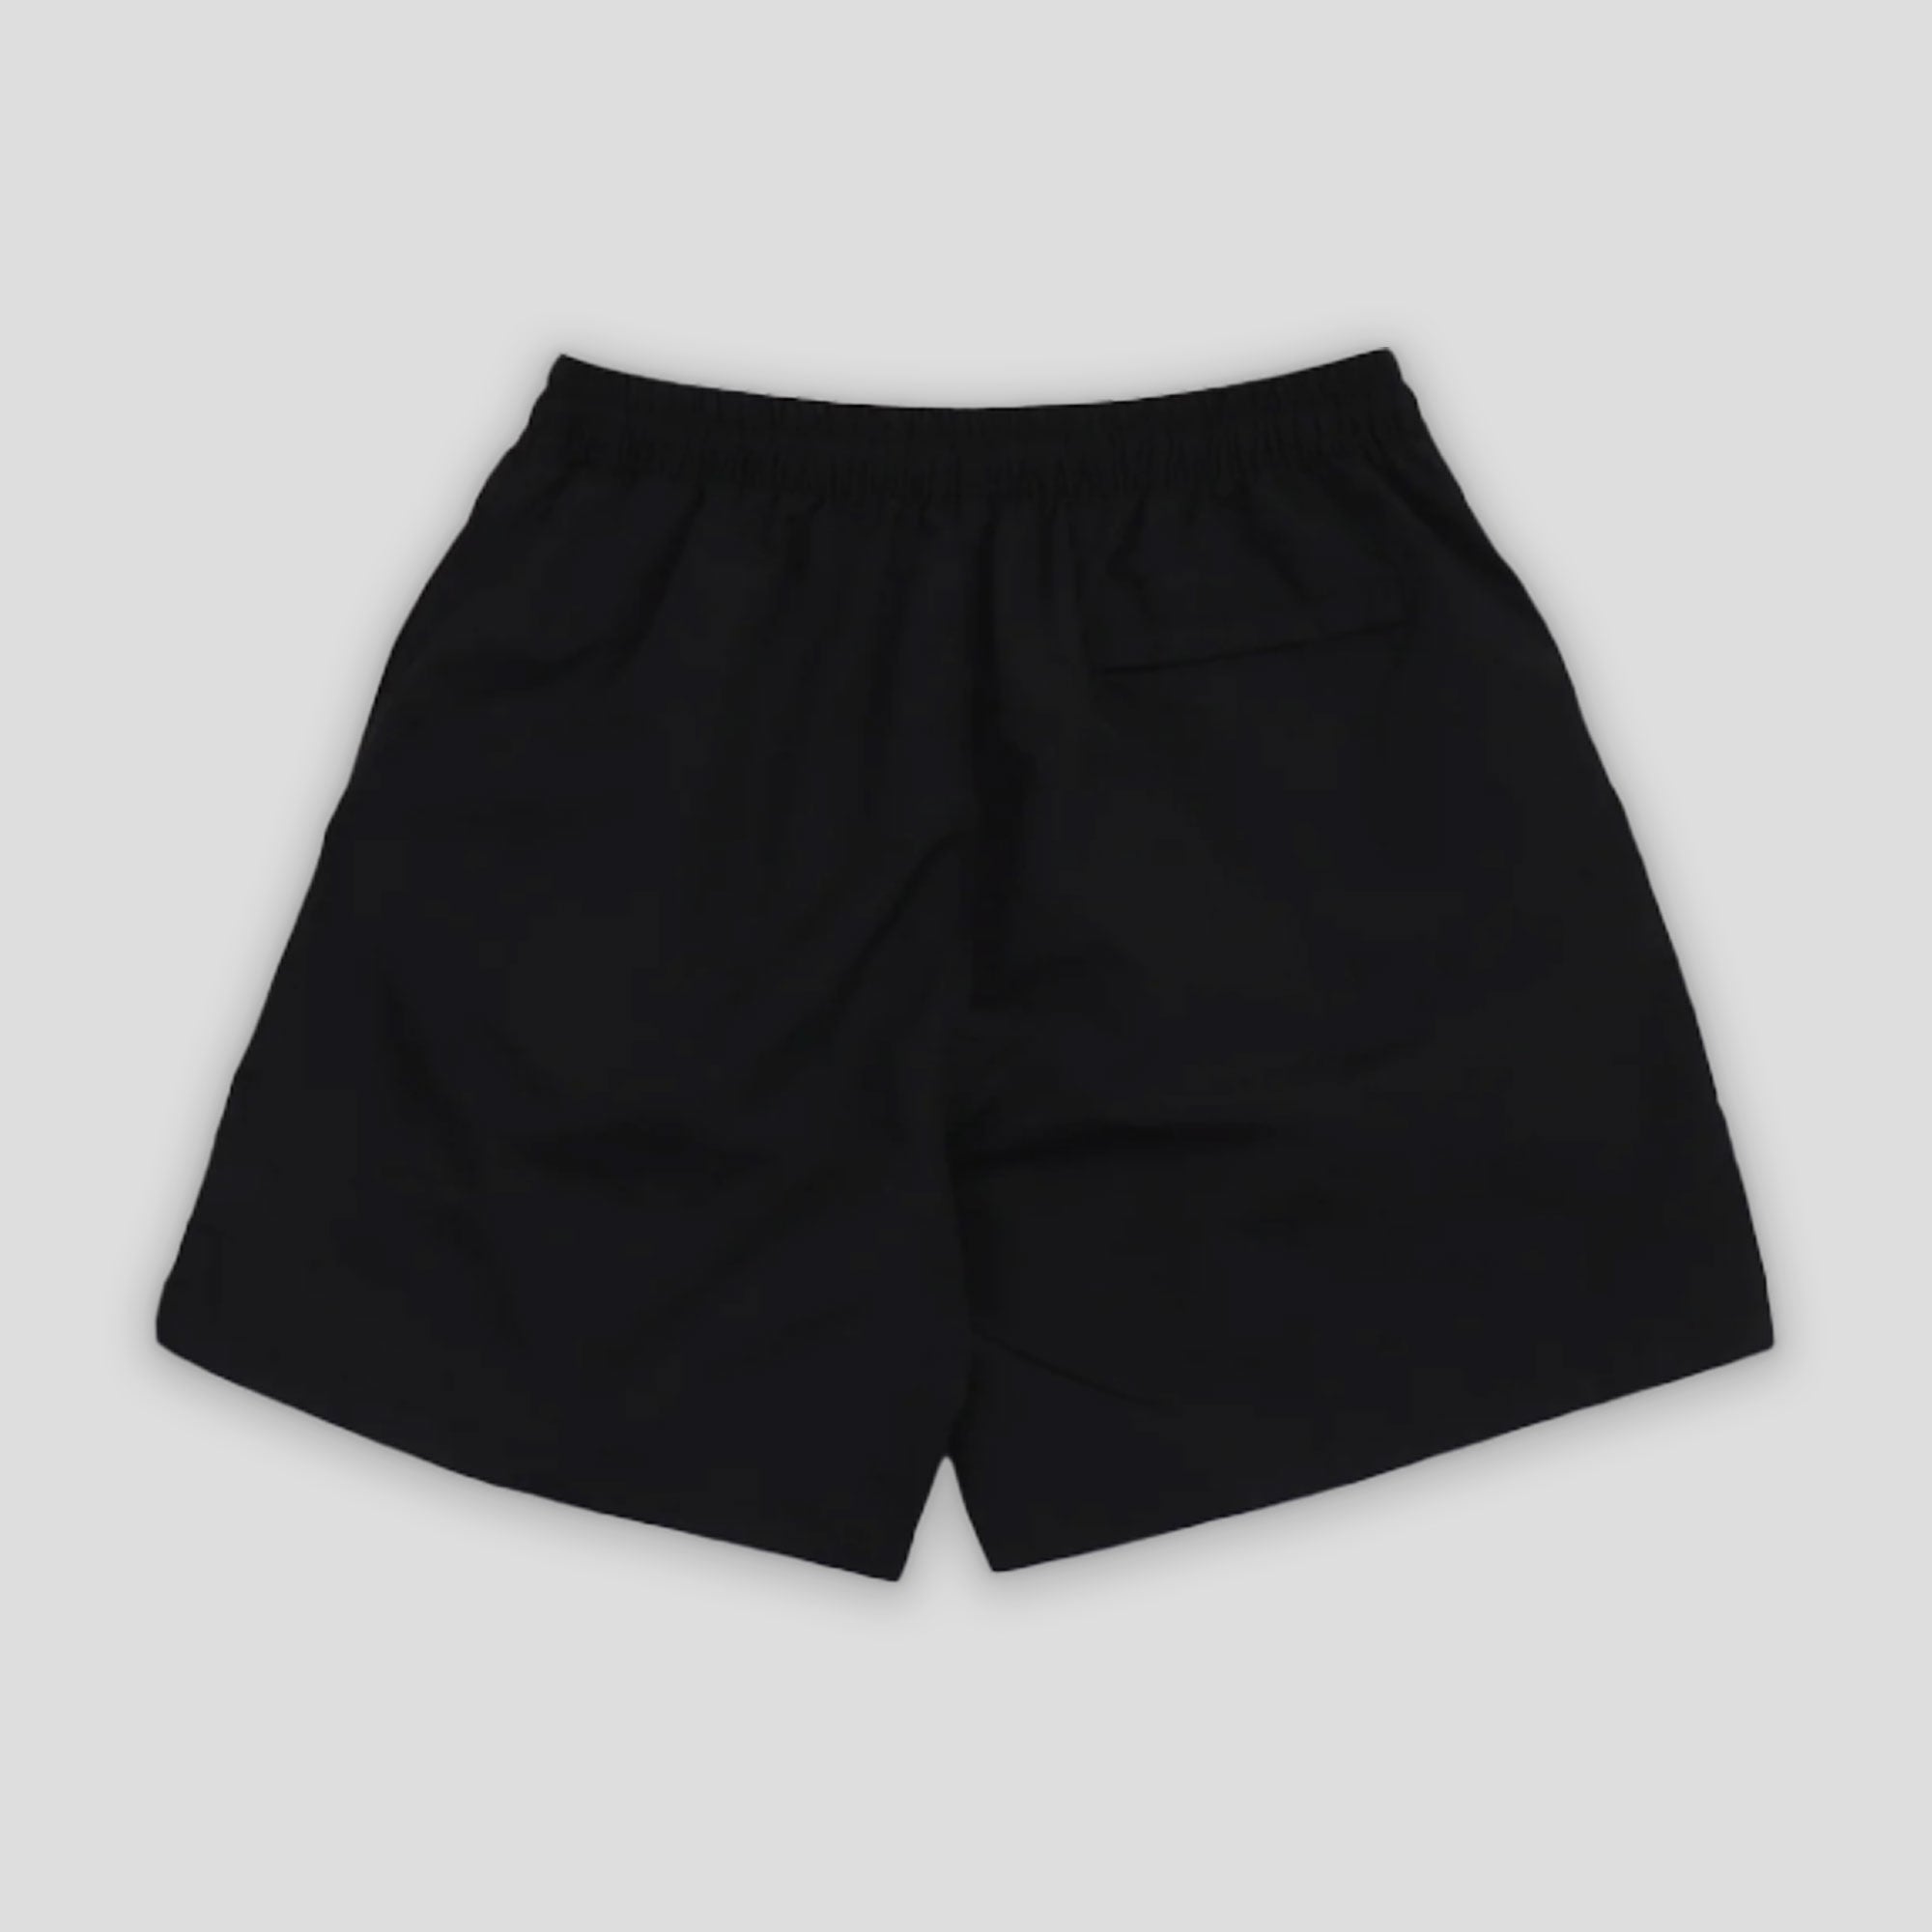 Dungeon Guts Nylon Shorts - Black